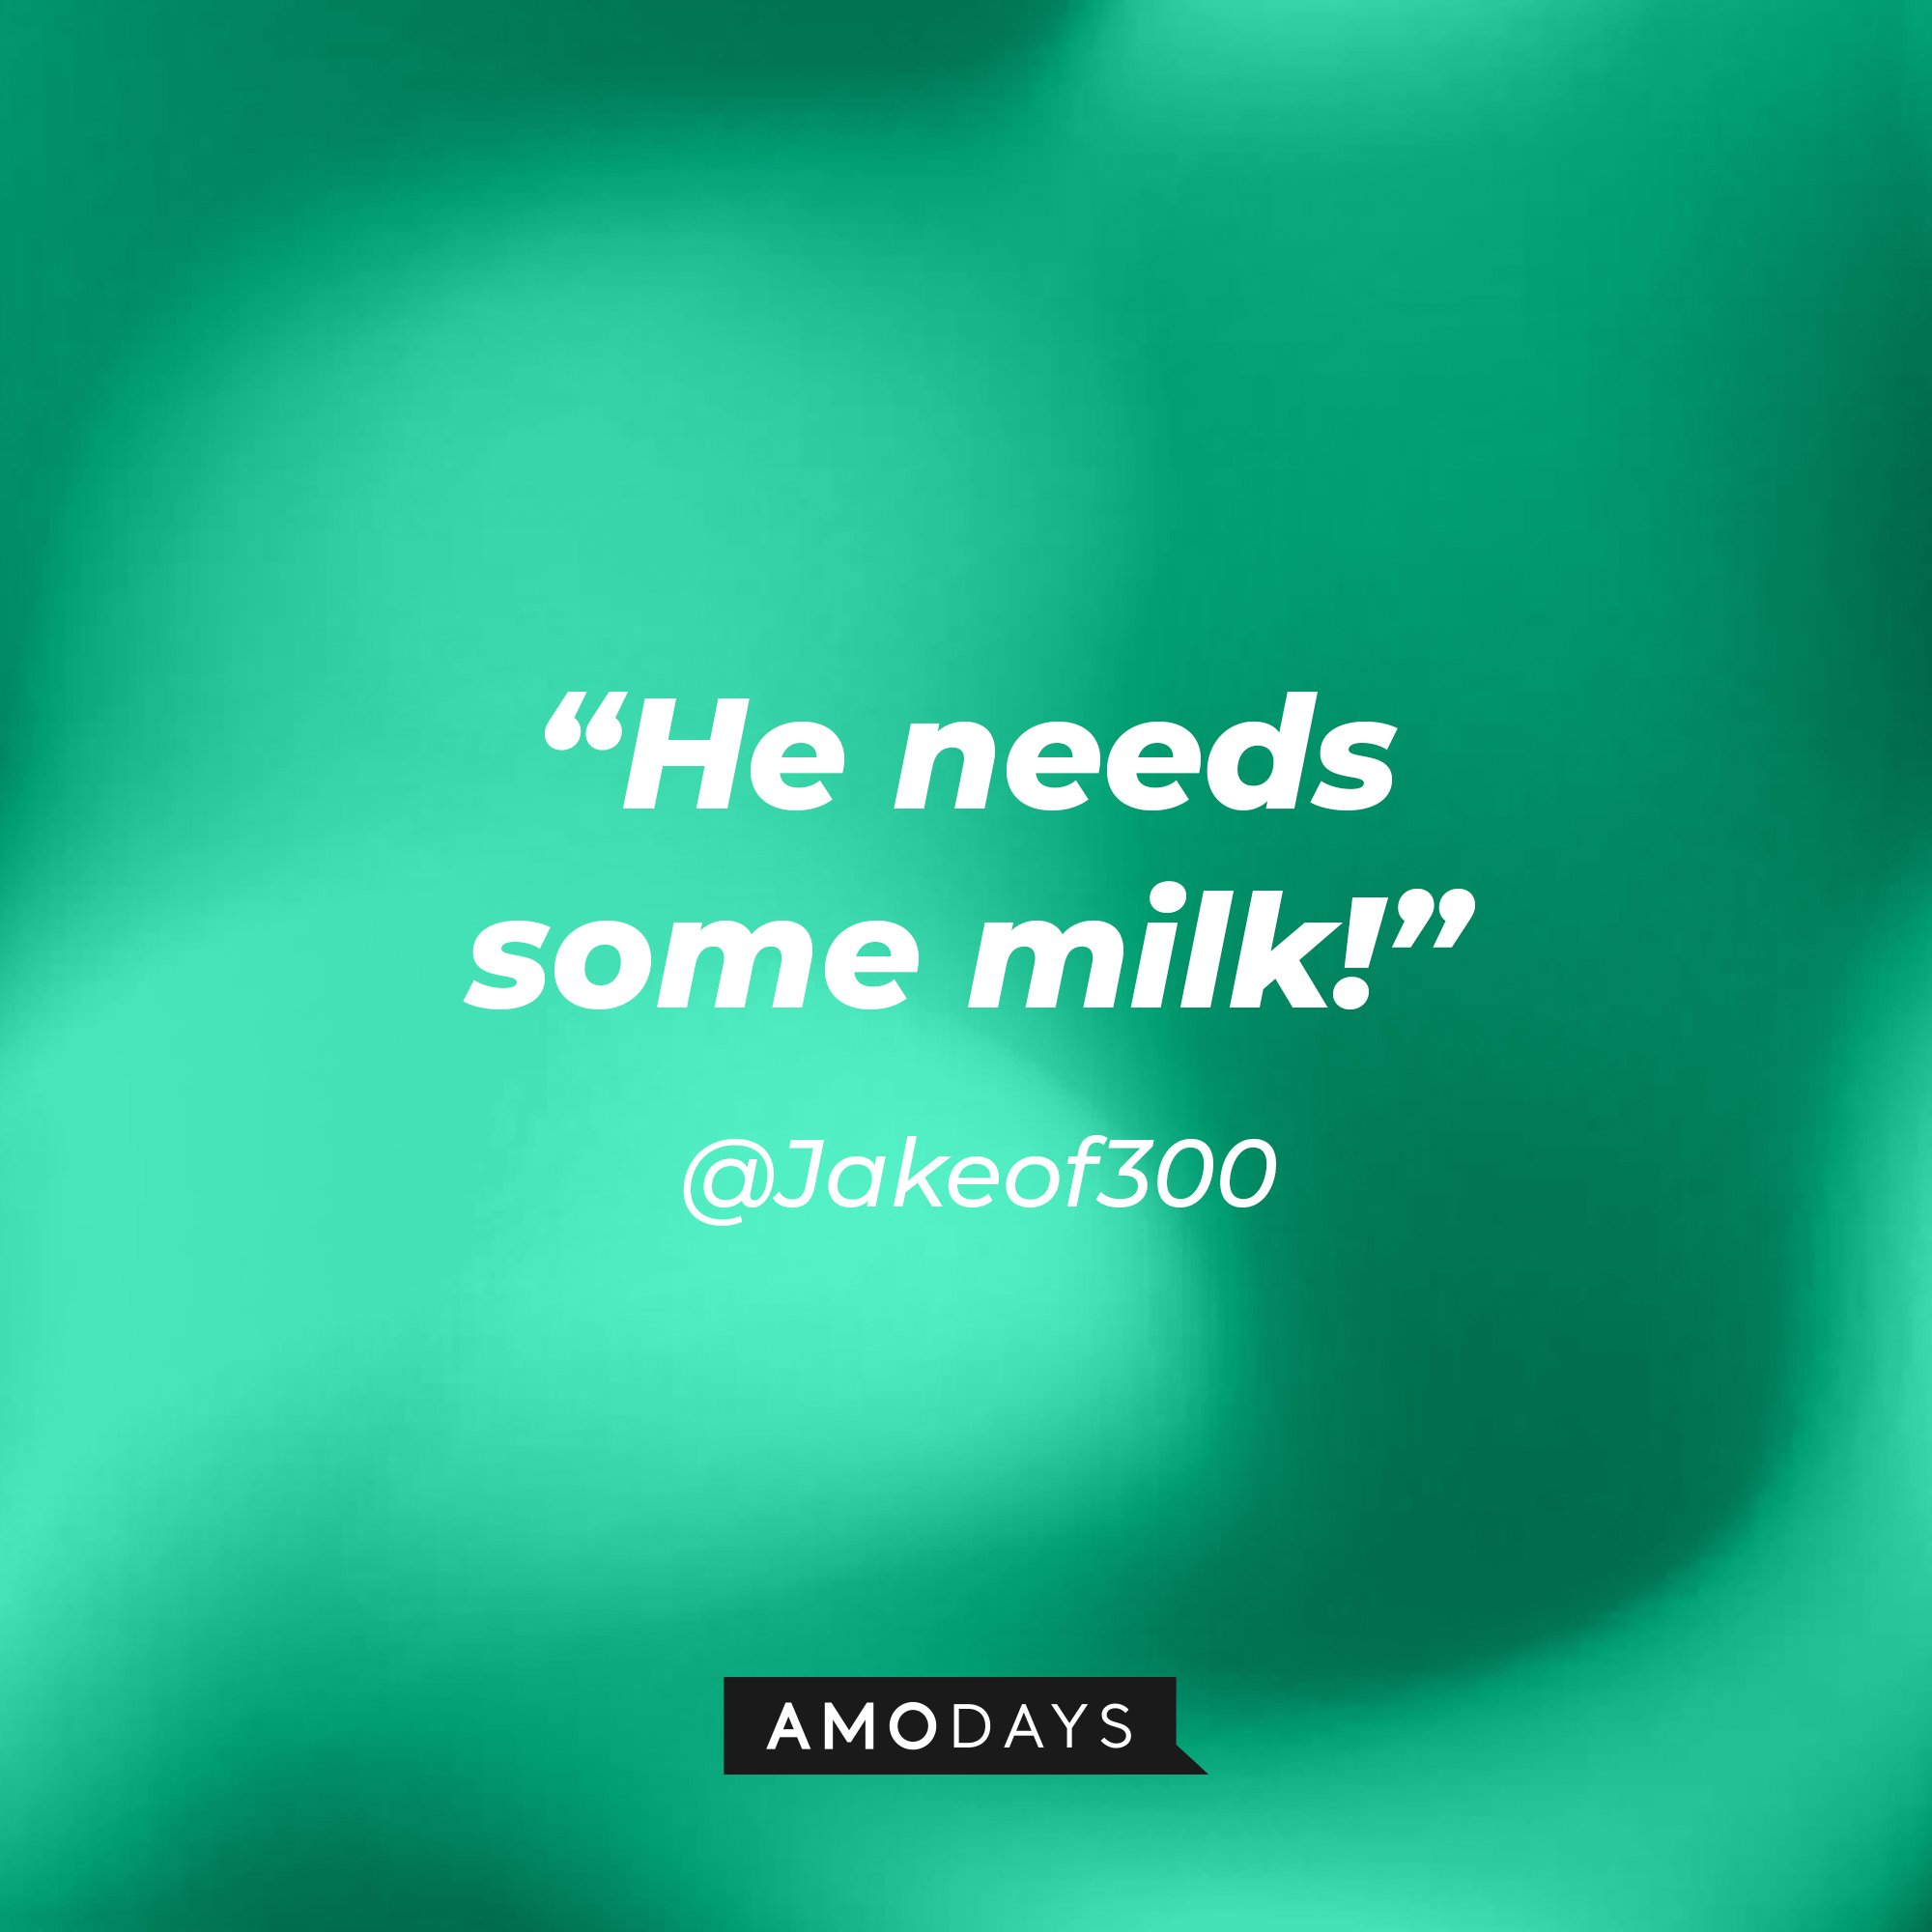 @Jakeof300's quote: “He needs some milk!” | Image: AmoDays